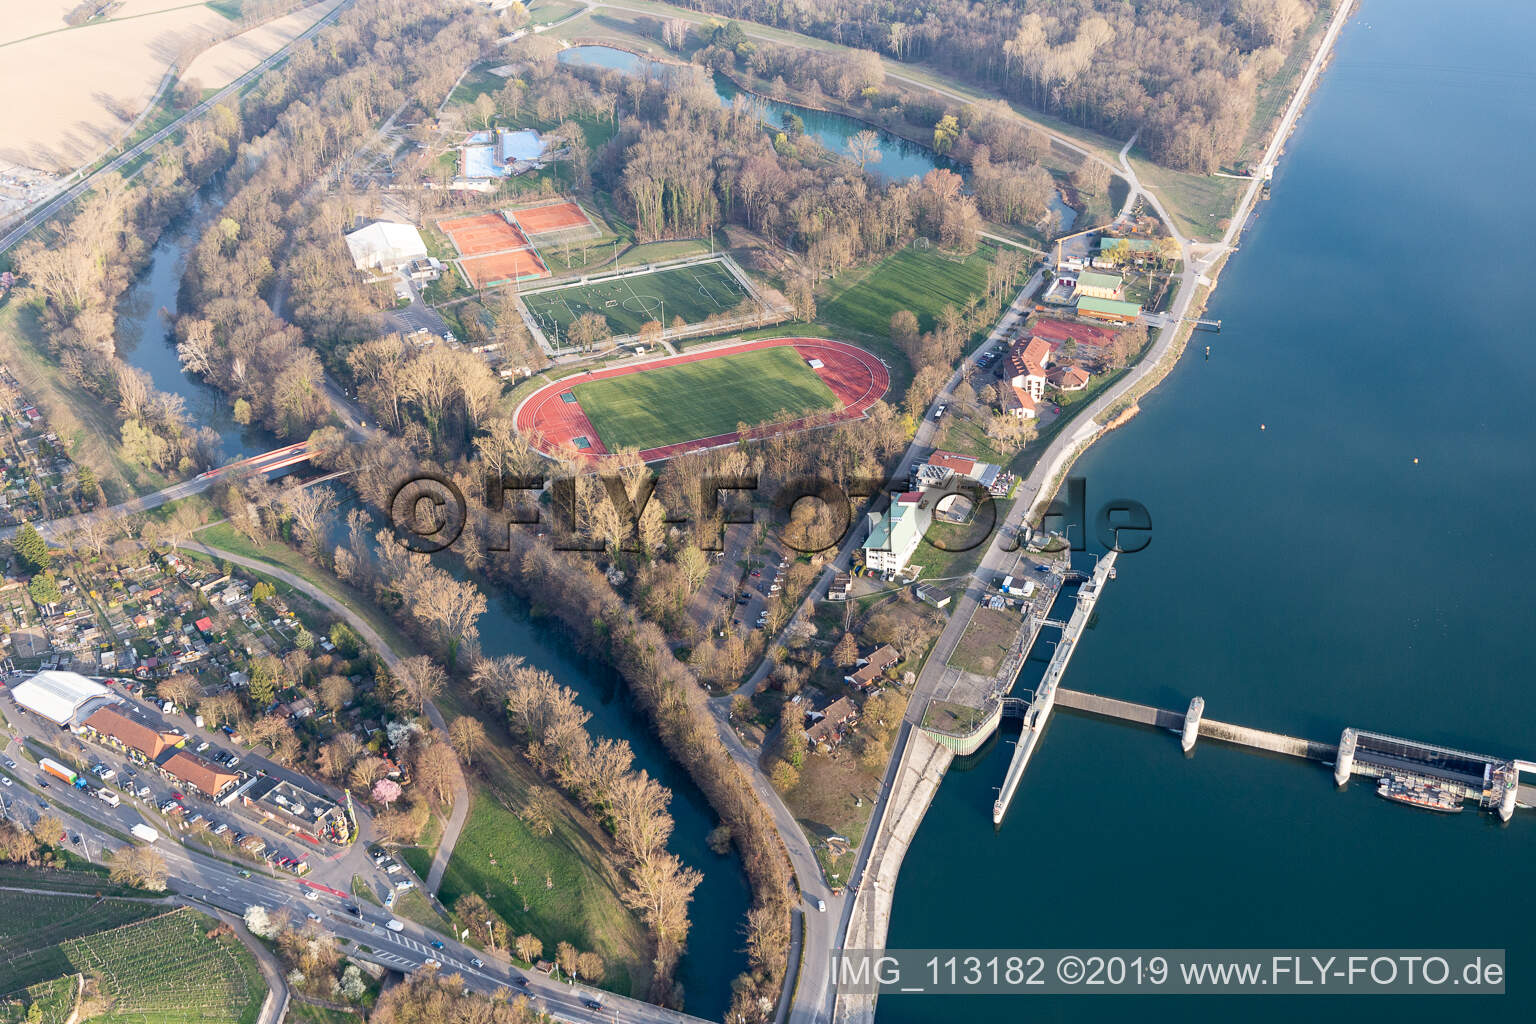 Vue aérienne de Stade forestier, piscine forestière à Breisach am Rhein dans le département Bade-Wurtemberg, Allemagne